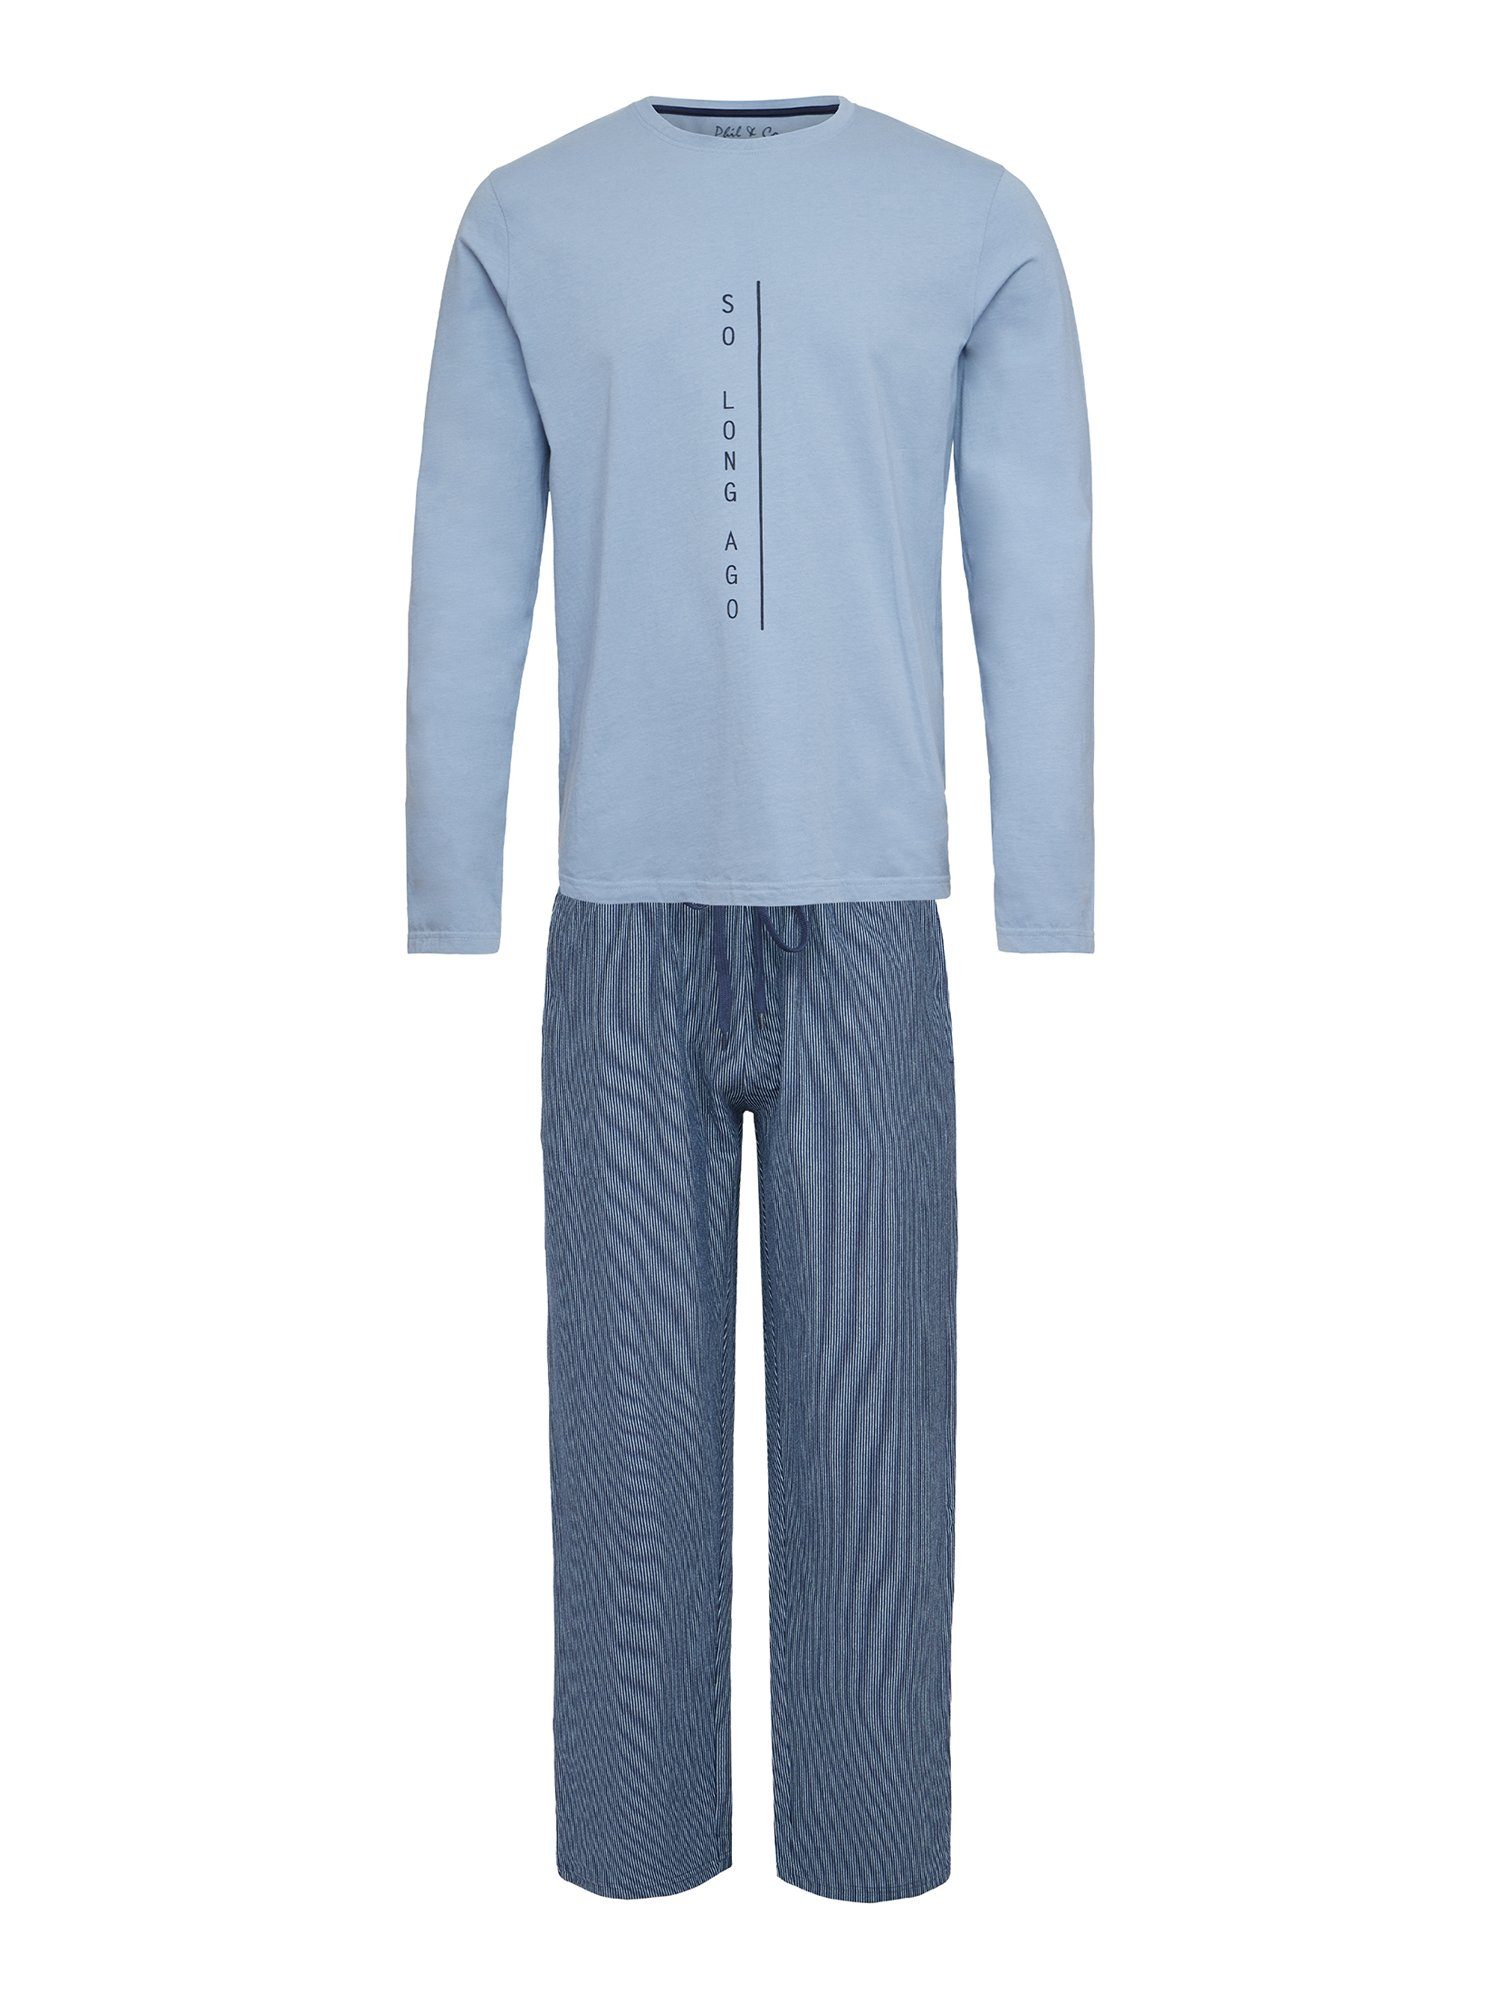 Co. tlg) Phil (2 bequem schlafanzug hellblau-nadelstreifen schlafmode Pyjama Special &